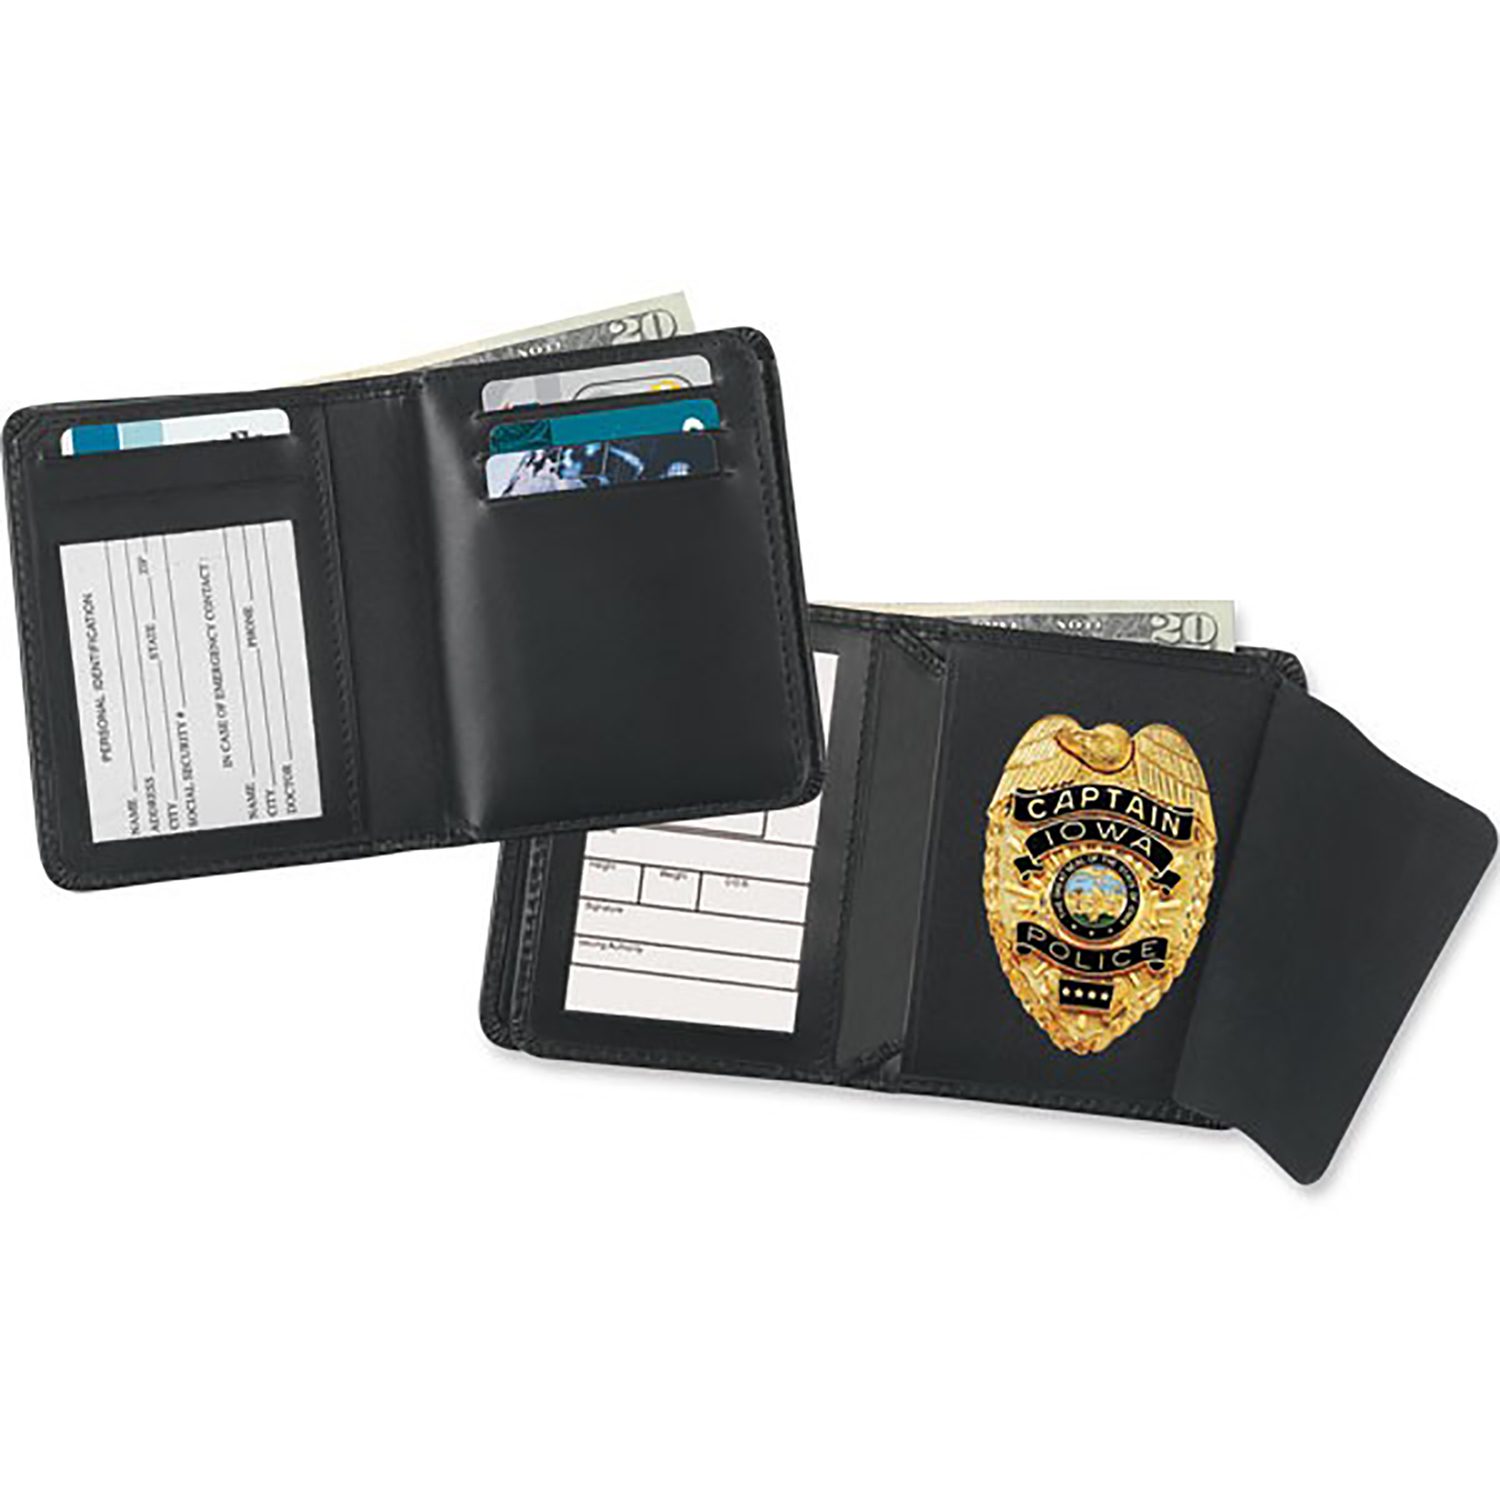 Strong Leather Deluxe Hidden Badge Single ID Badge Wallet